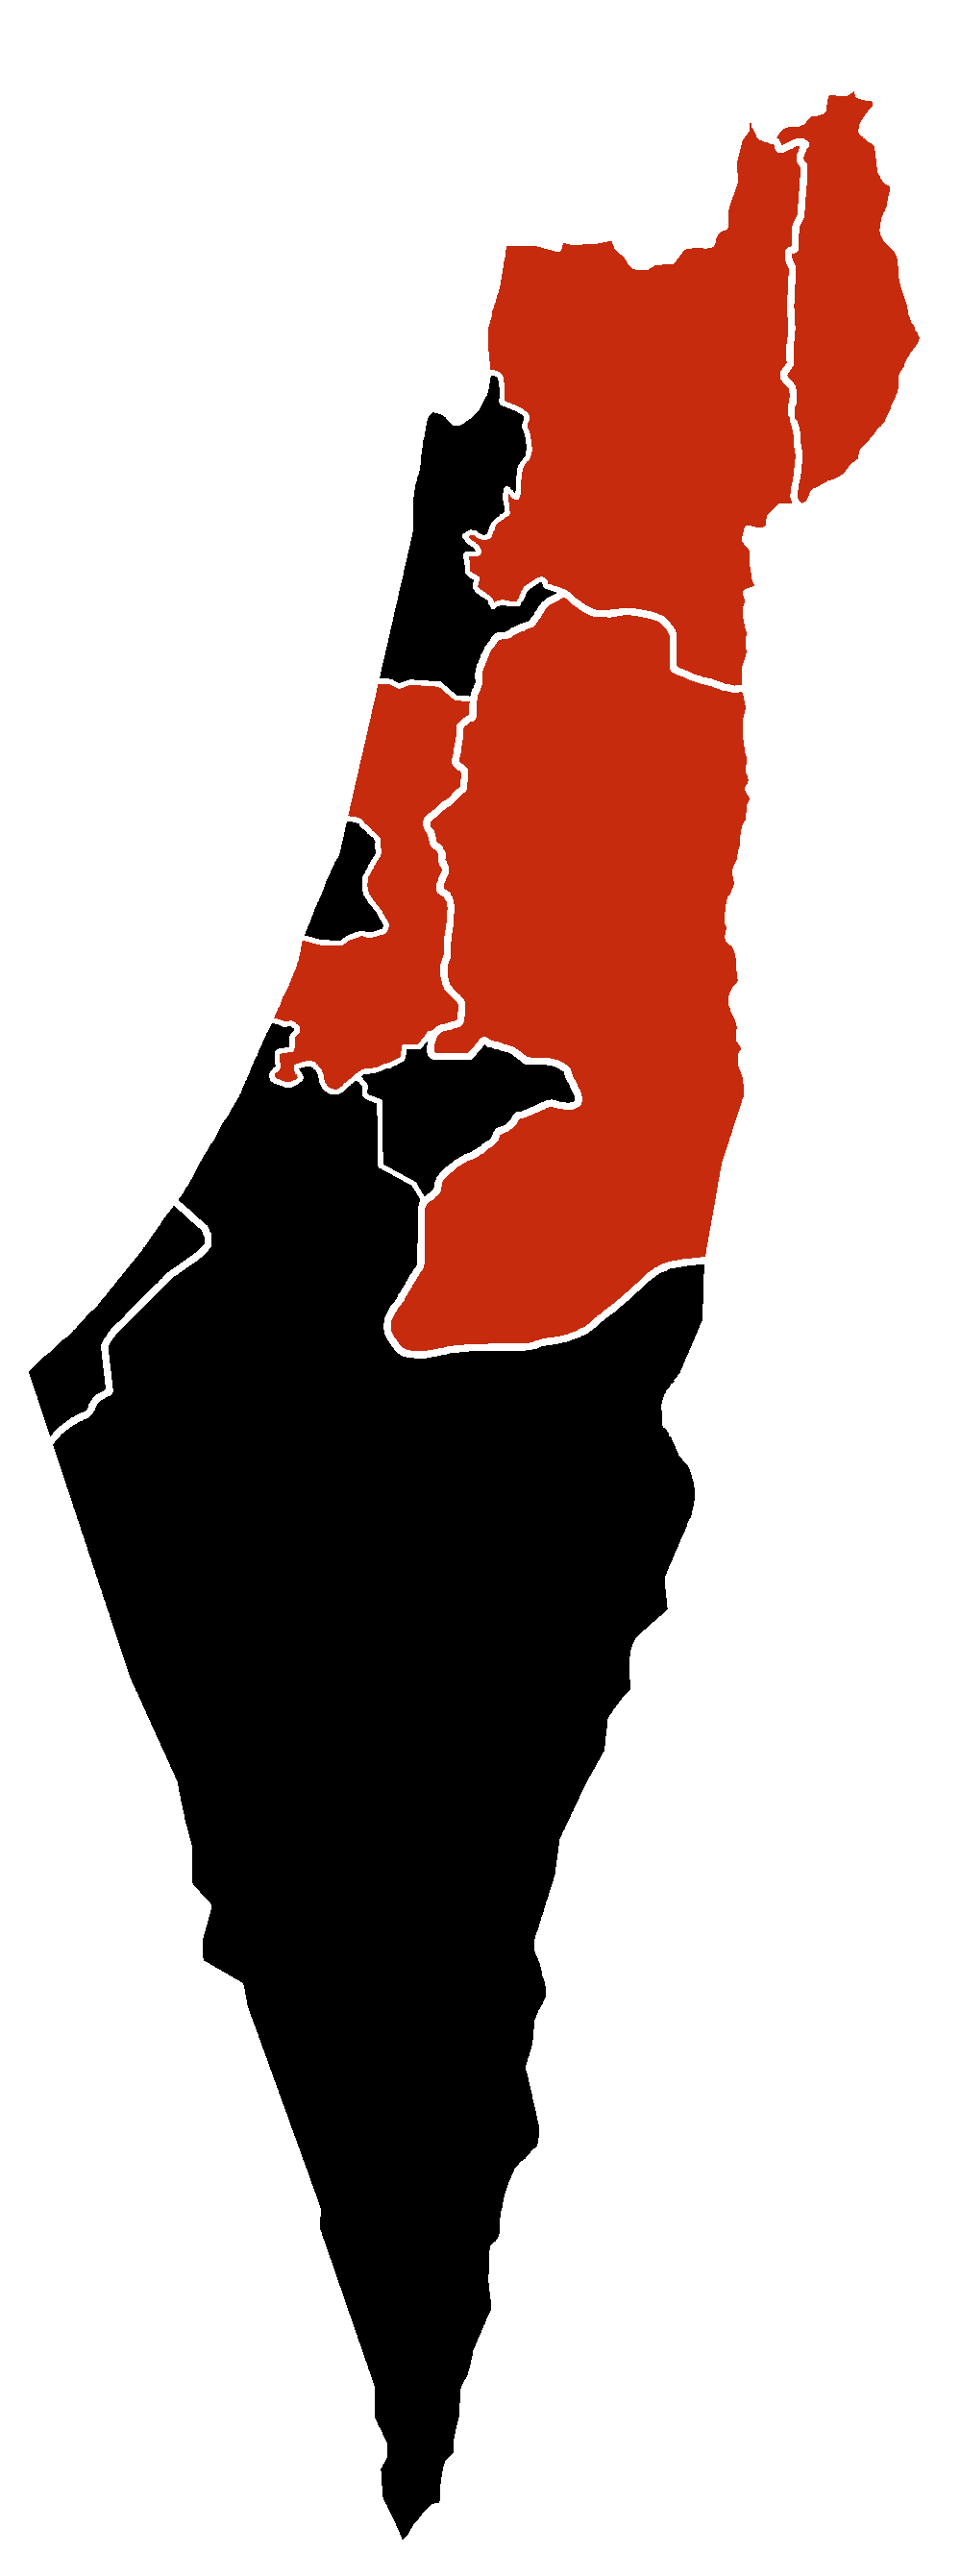 Israel outline map.png